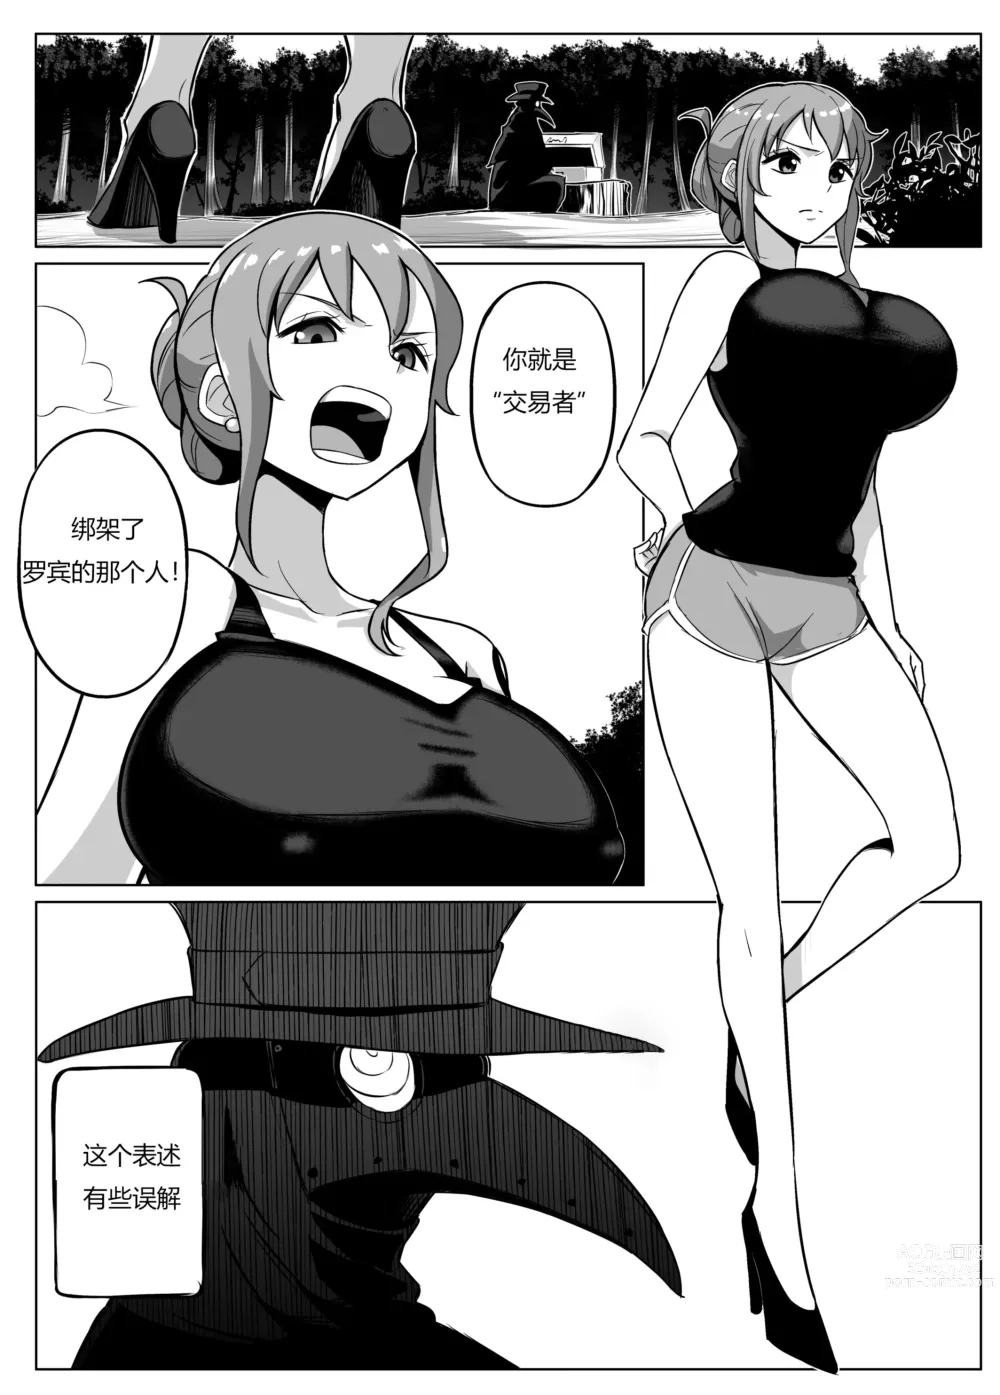 Page 2 of manga Trade